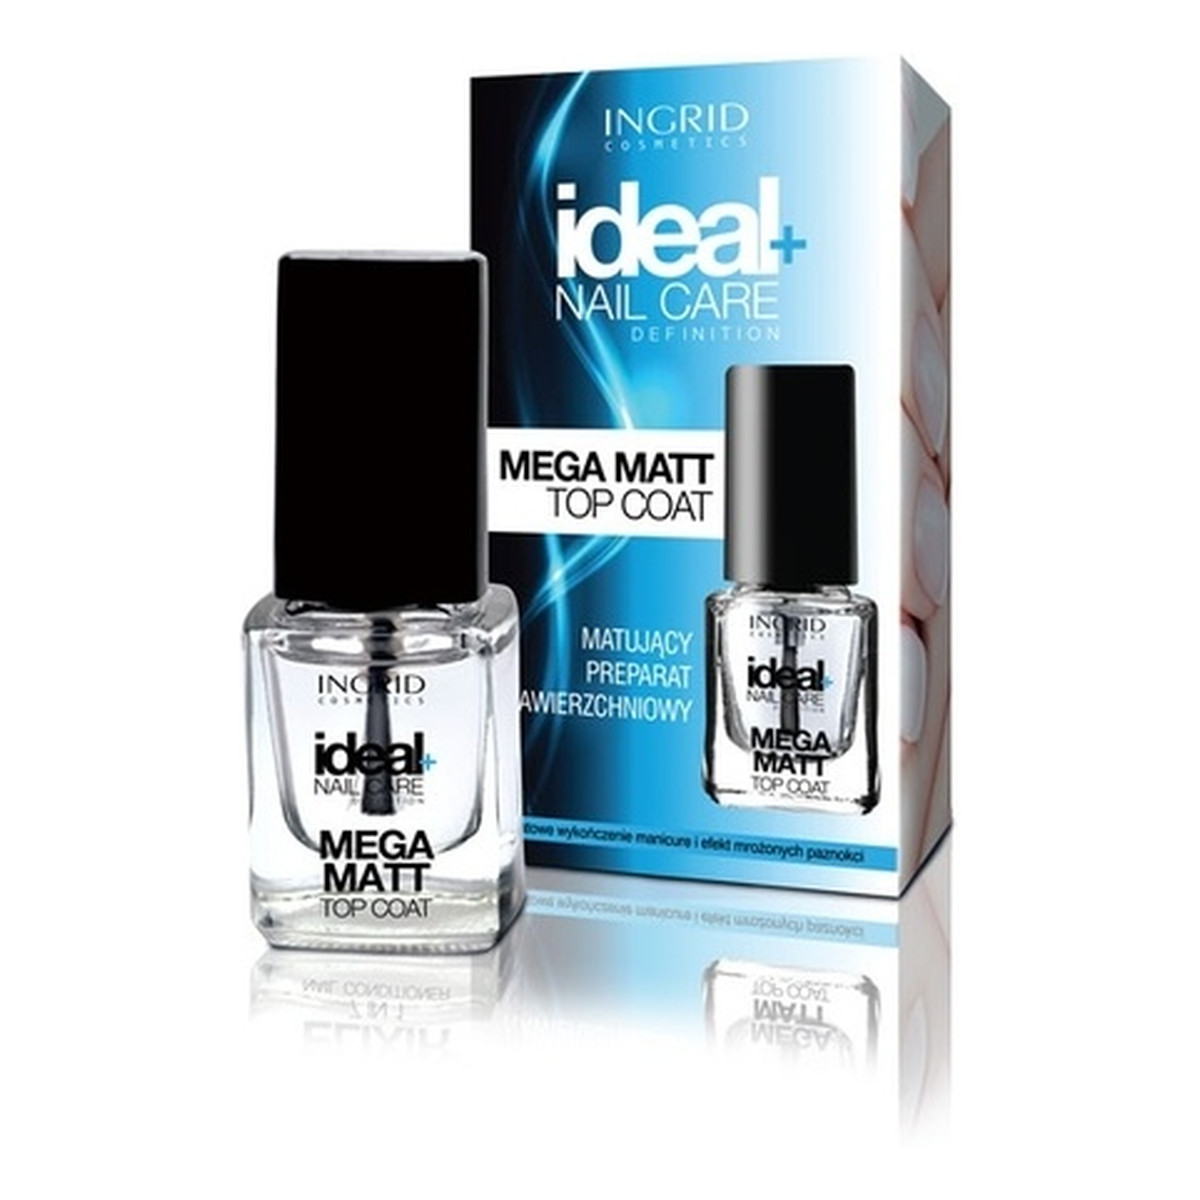 Ingrid Ideal Nail Care Definition Mega Matt Profesjonalny Preparat Nawierzchniowy 7ml